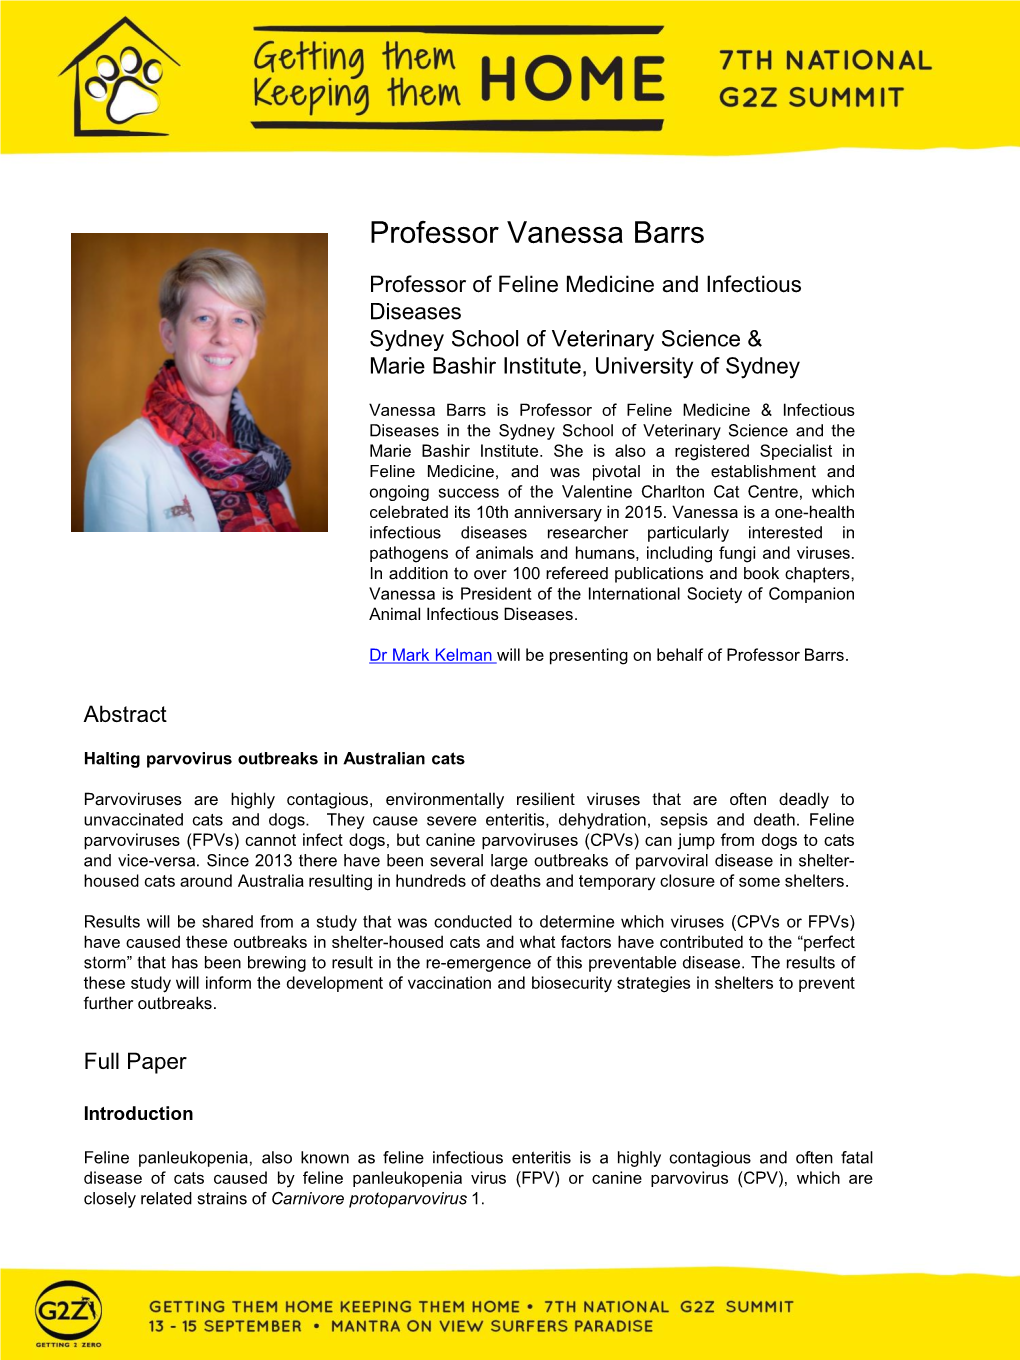 Vanessa Barrs Halting Parvovirus Outbreaks in Australian Cats Paper.Pdf